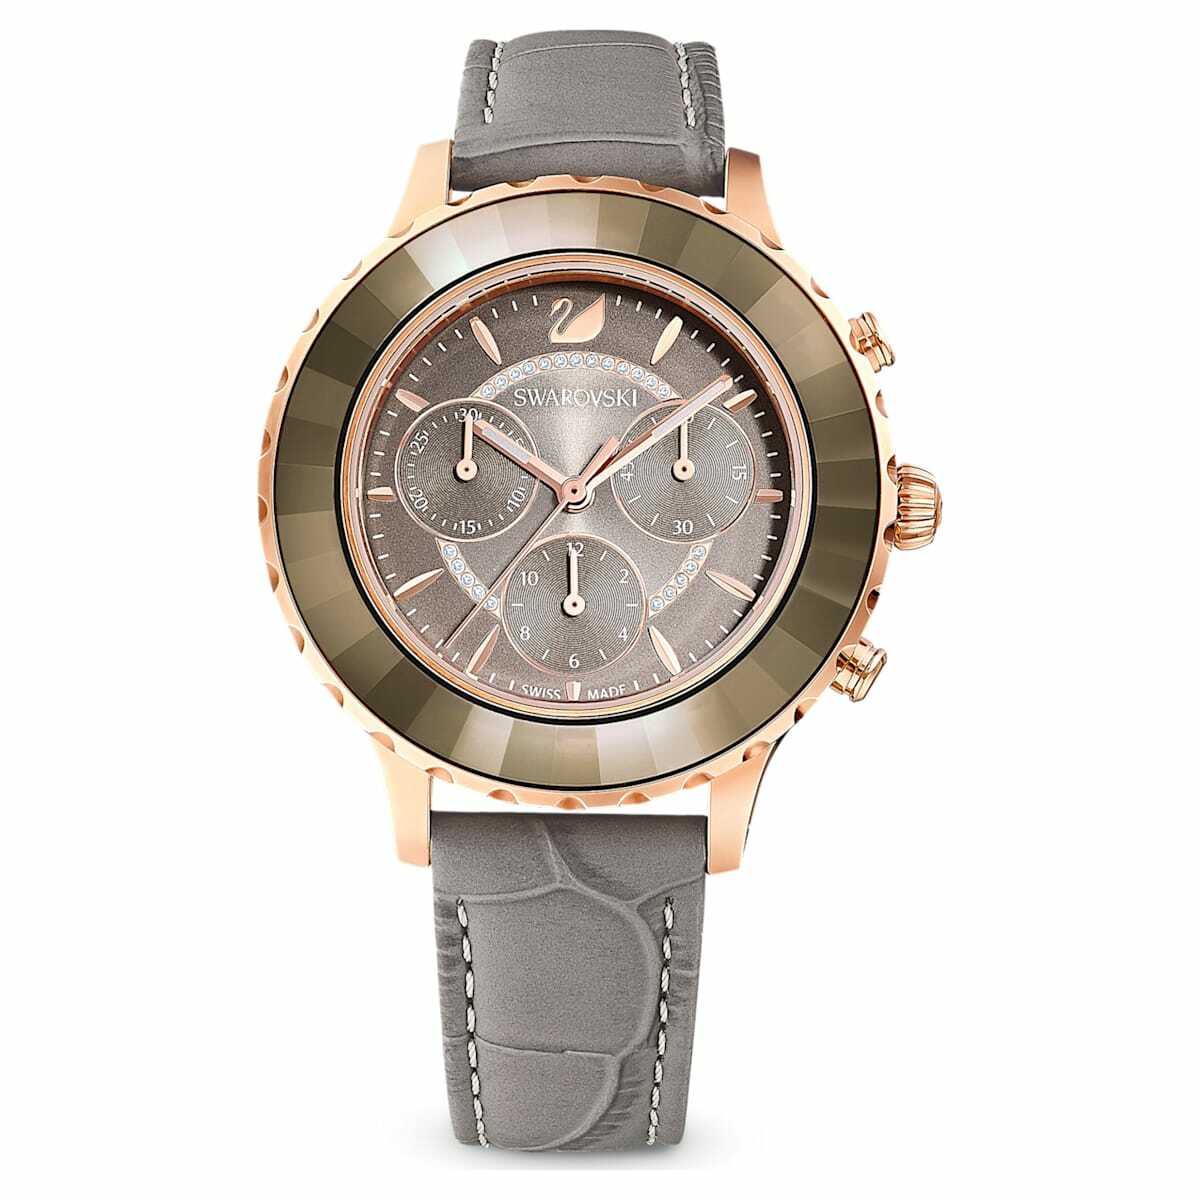 octea-lux-chrono-watch--leather-strap--gray--rose-gold-tone-pvd-swarovski-5452495.jpg